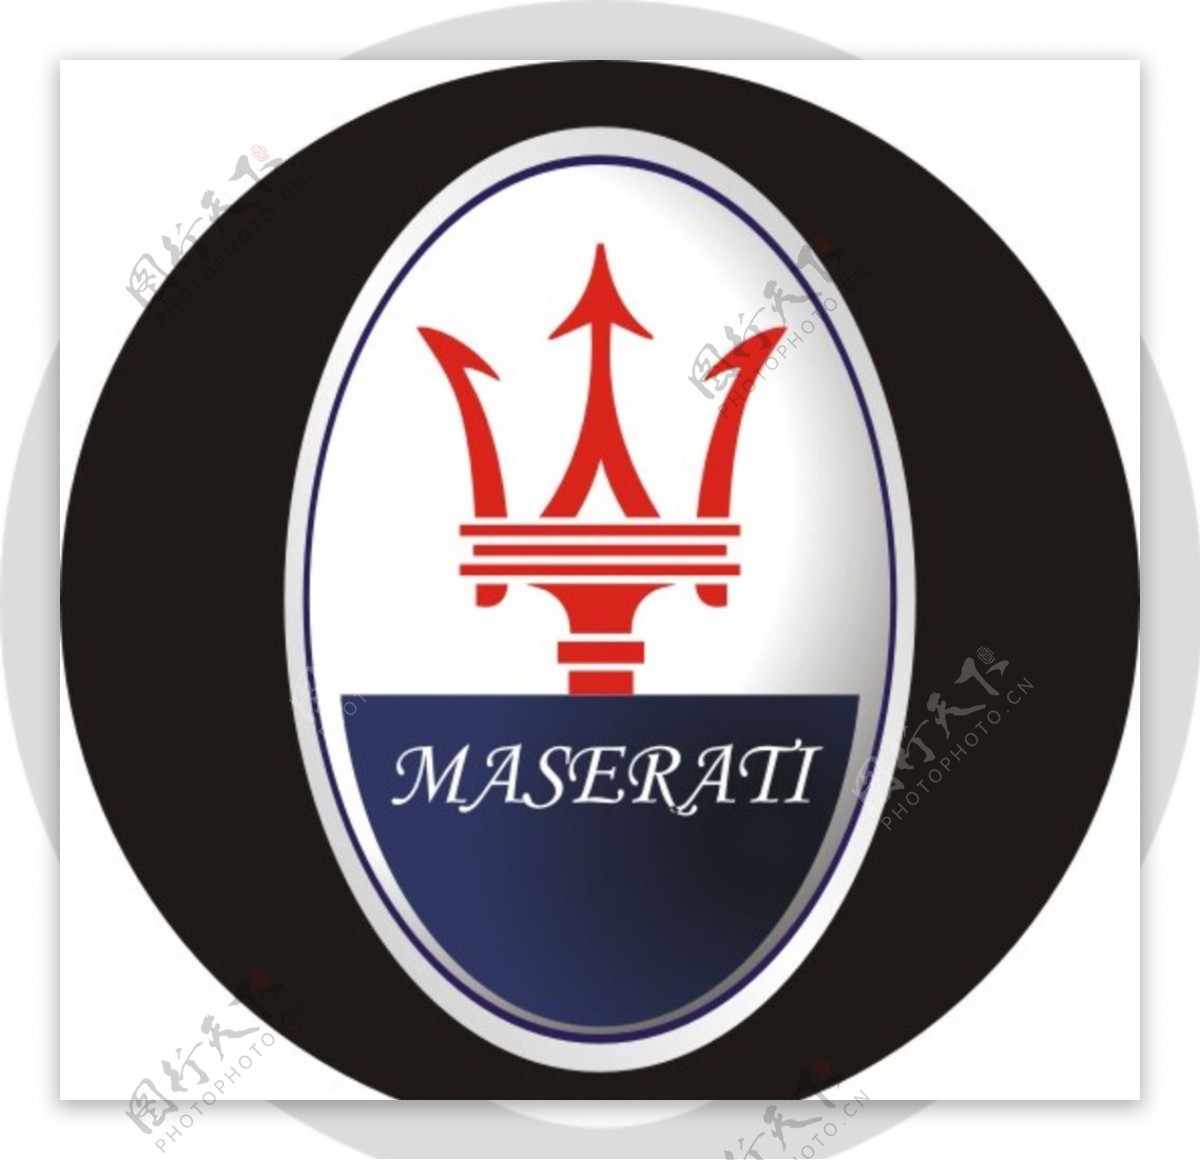 Free Images : wing, wheel, symbol, font, logo, maserati, characters, car brand, noble model ...